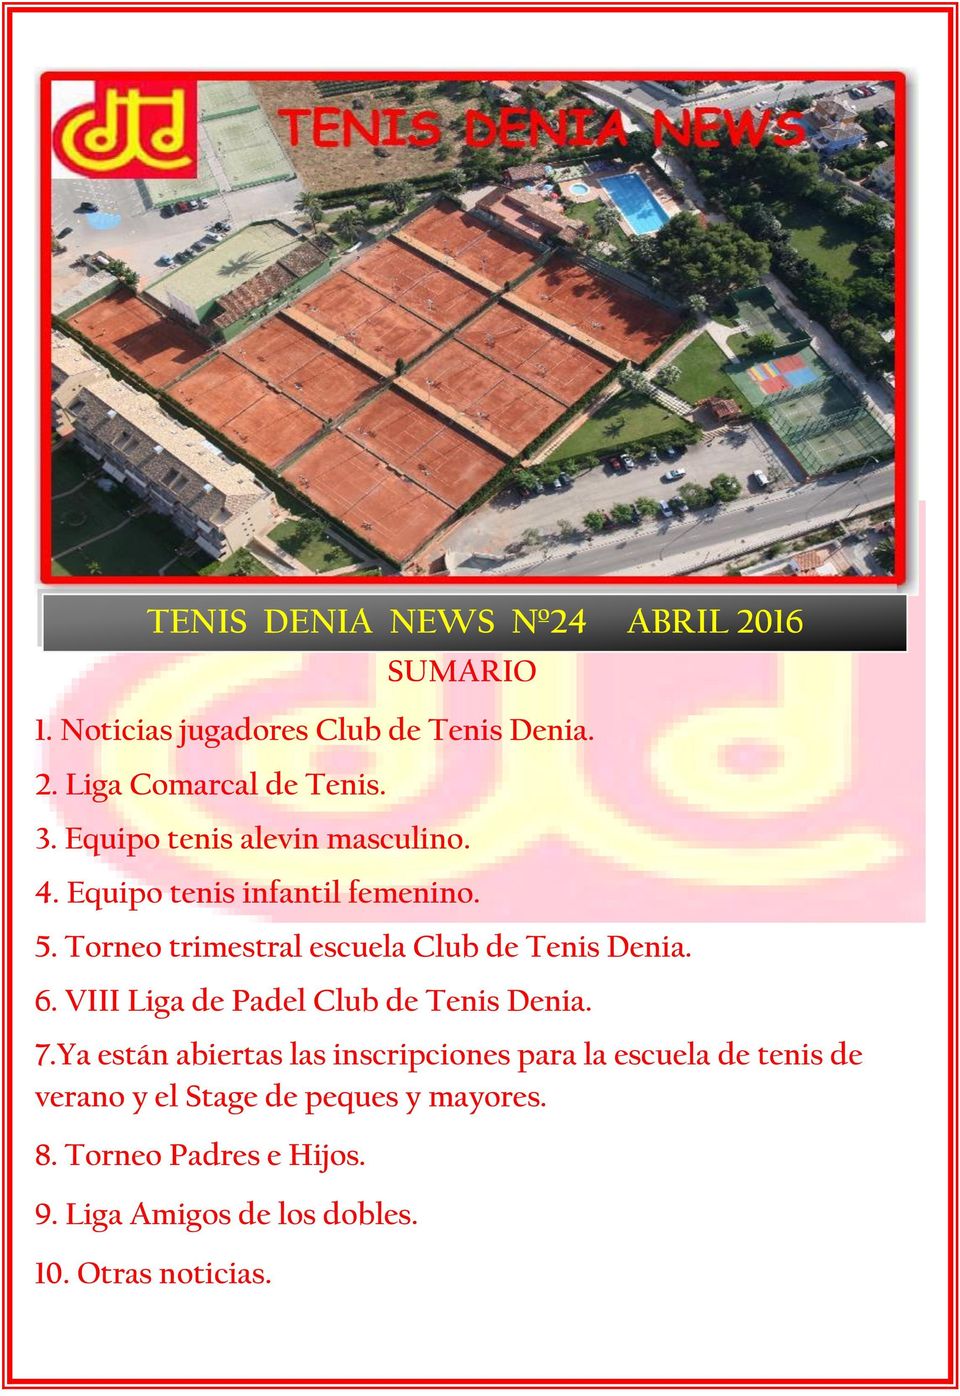 Torneo trimestral escuela Club de Tenis Denia. 6. VIII Liga de Padel Club de Tenis Denia. 7.